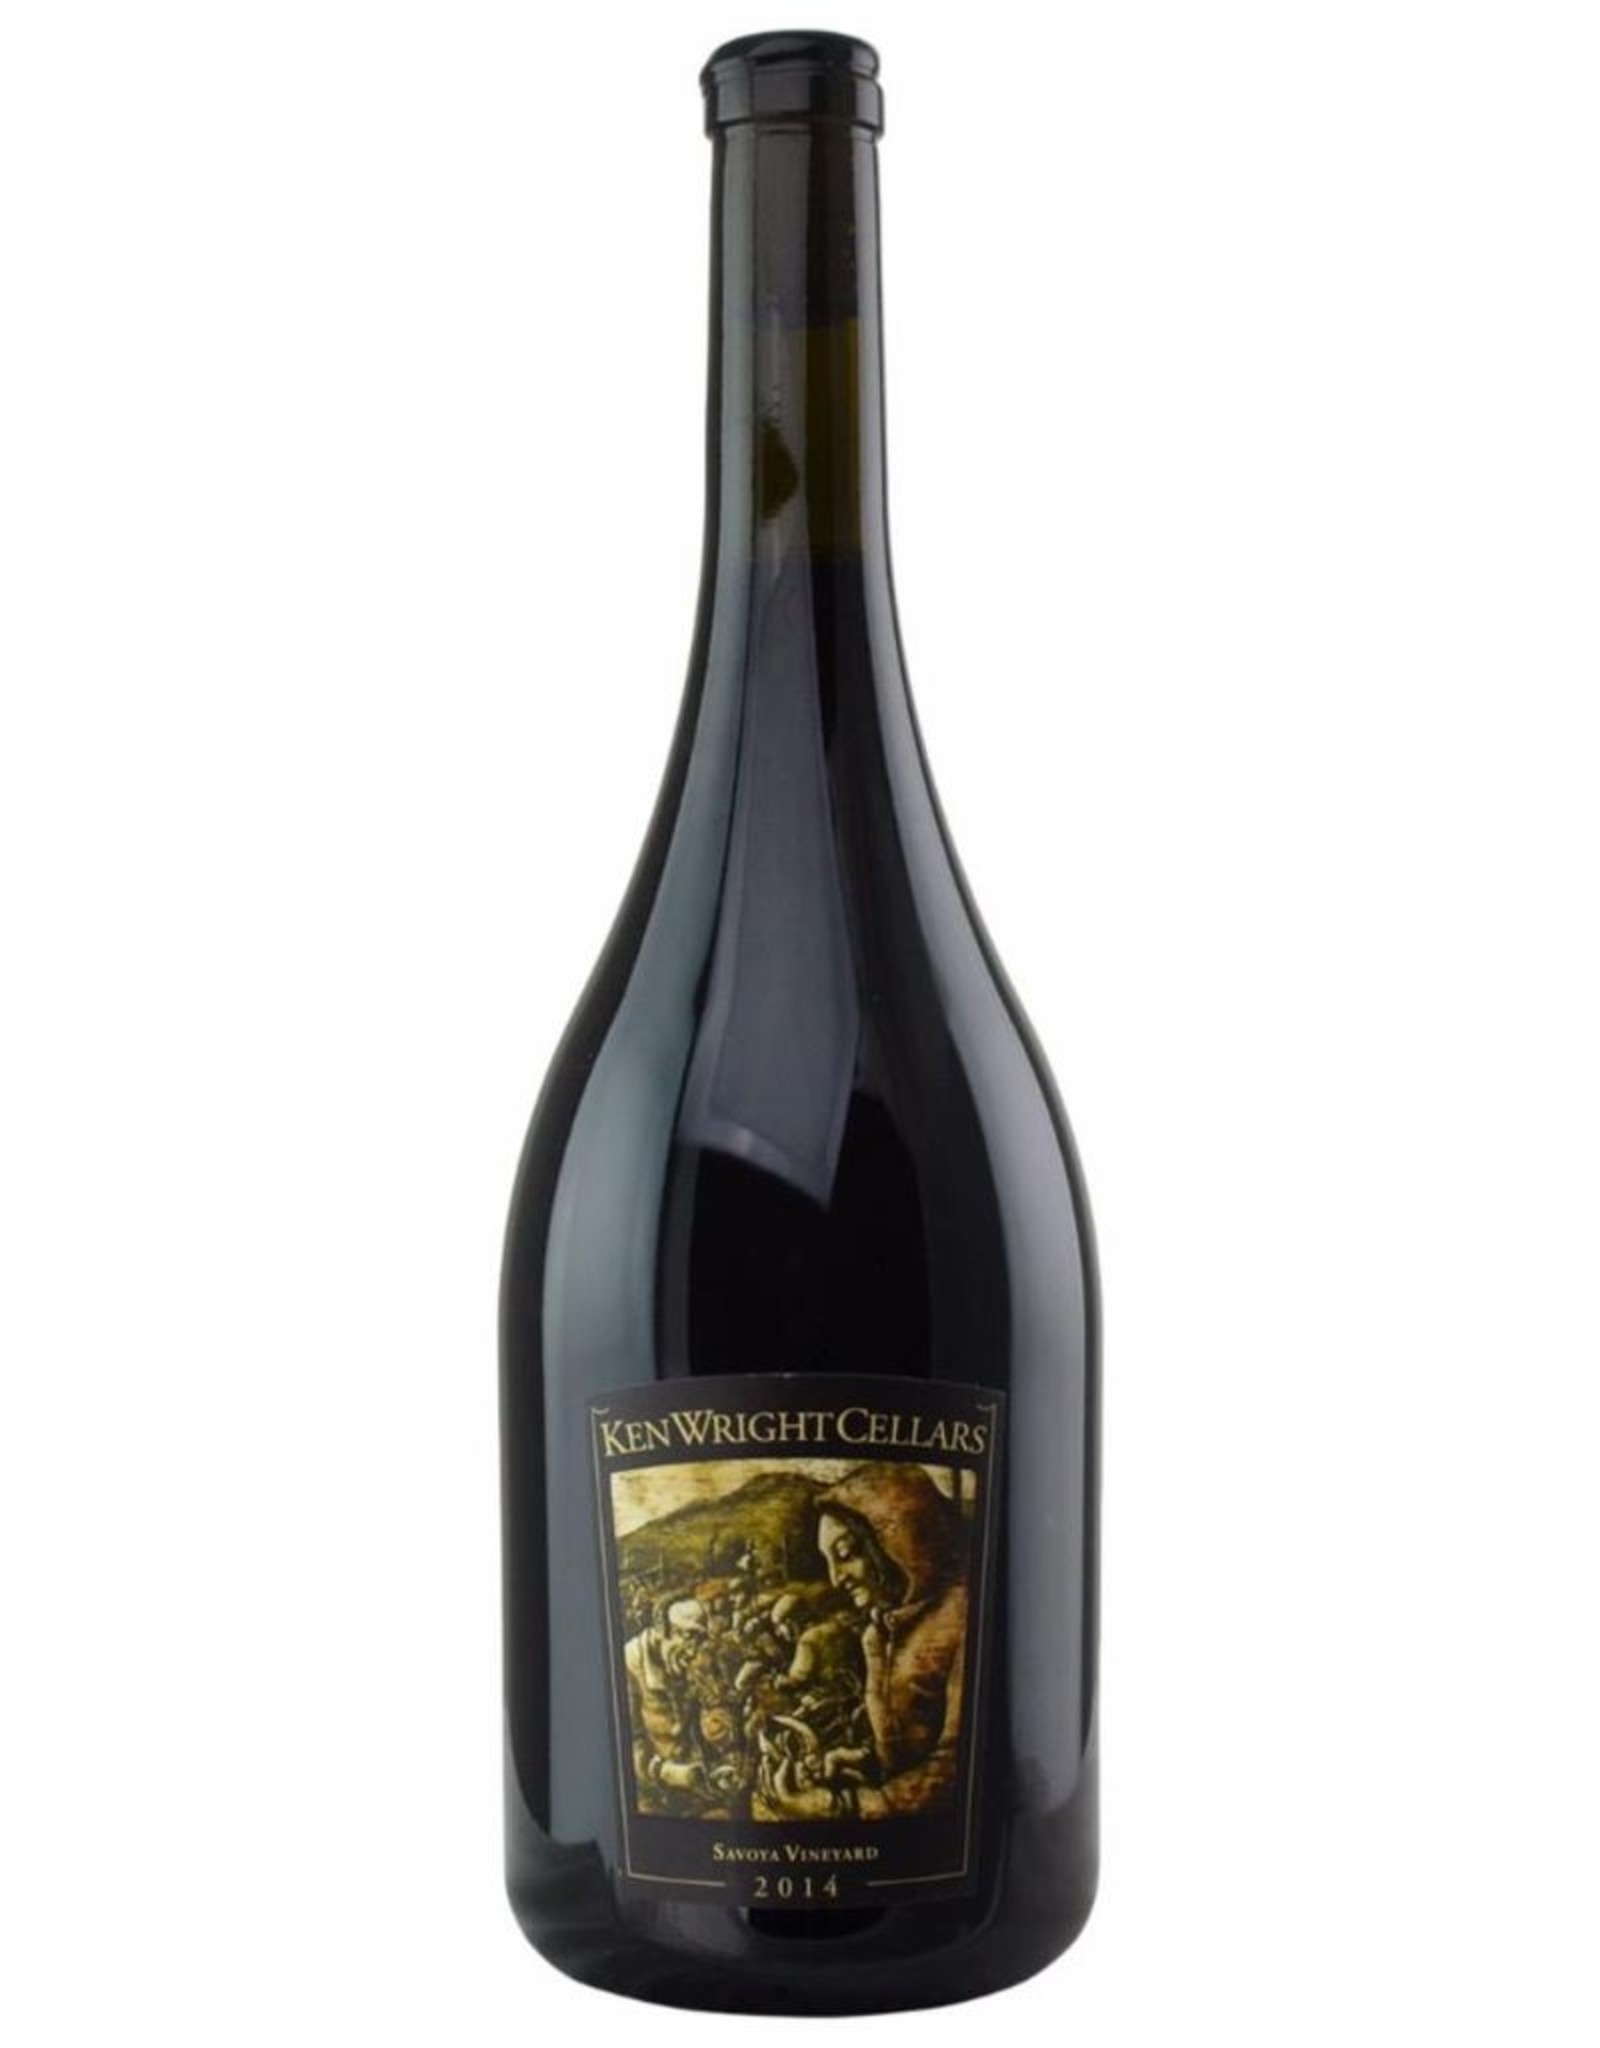 Red Wine 2014, Ken Wright Cellars, Pinot Noir, Savoya Vineyard, Yamhill, Oregon,13.5% Alc, RP90